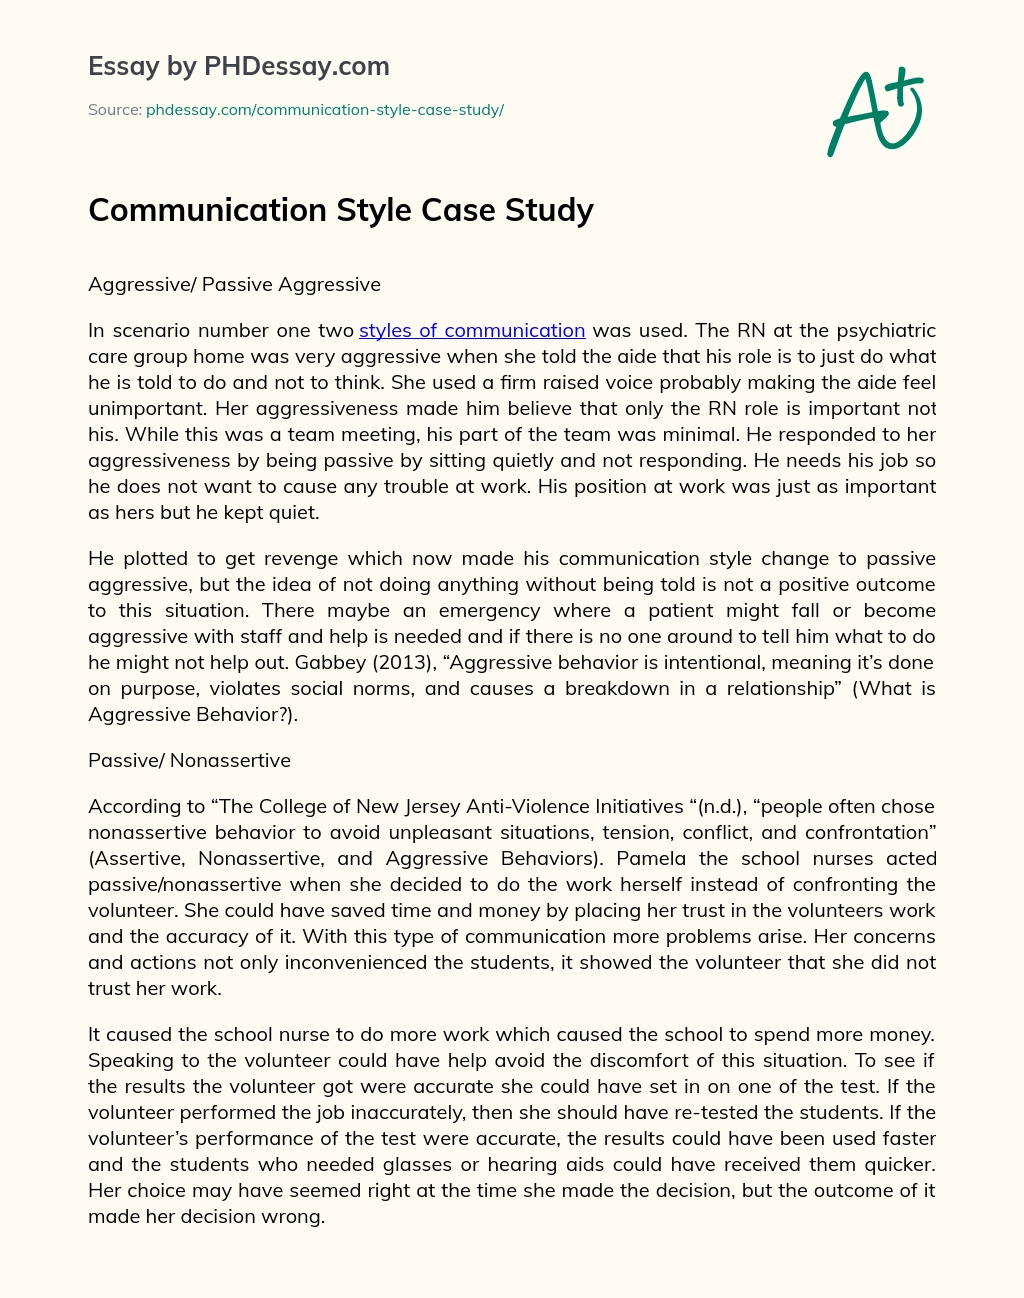 Communication Style Case Study essay